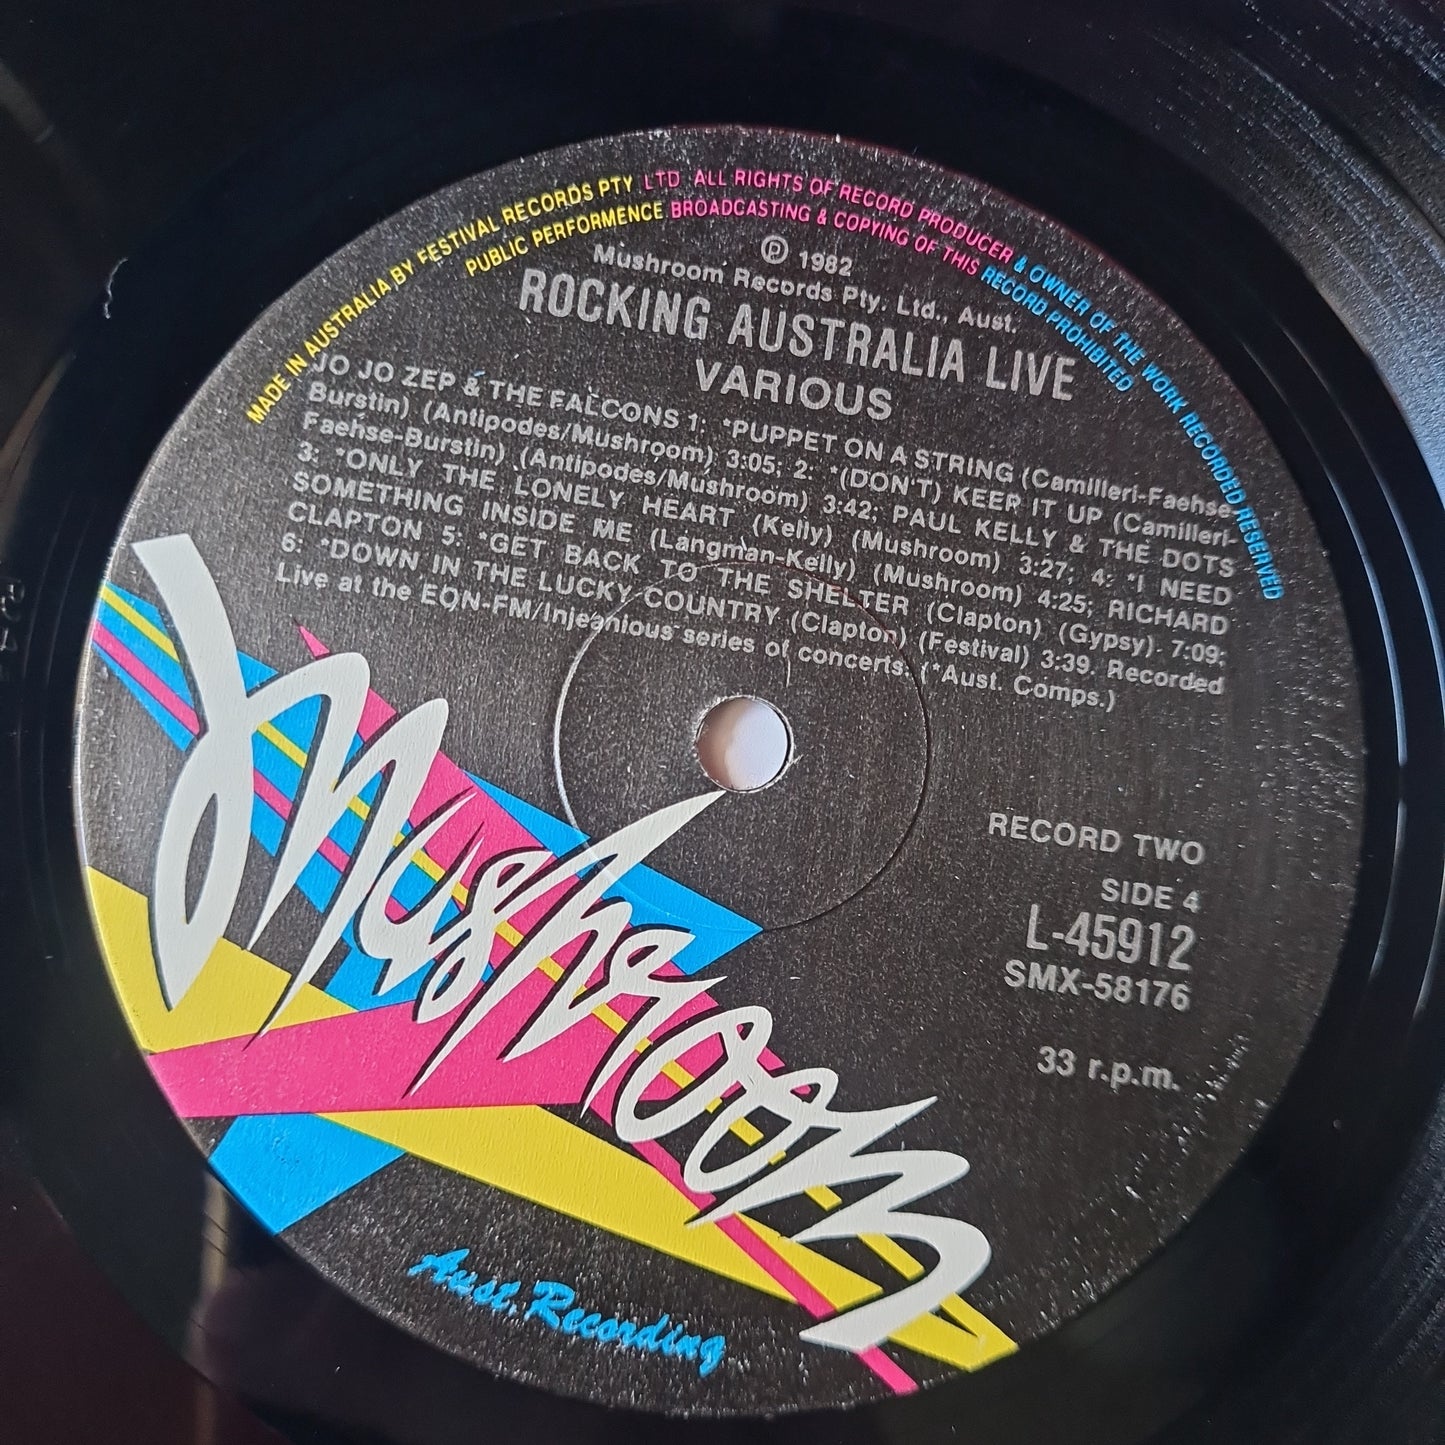 Various: Sunny Boys, Australian Crawl, Men At Work, Richard Clapton, etc – Rocking Australia Live - 1982 (2LPGatefold) - Vinyl Record - Vinyl Record